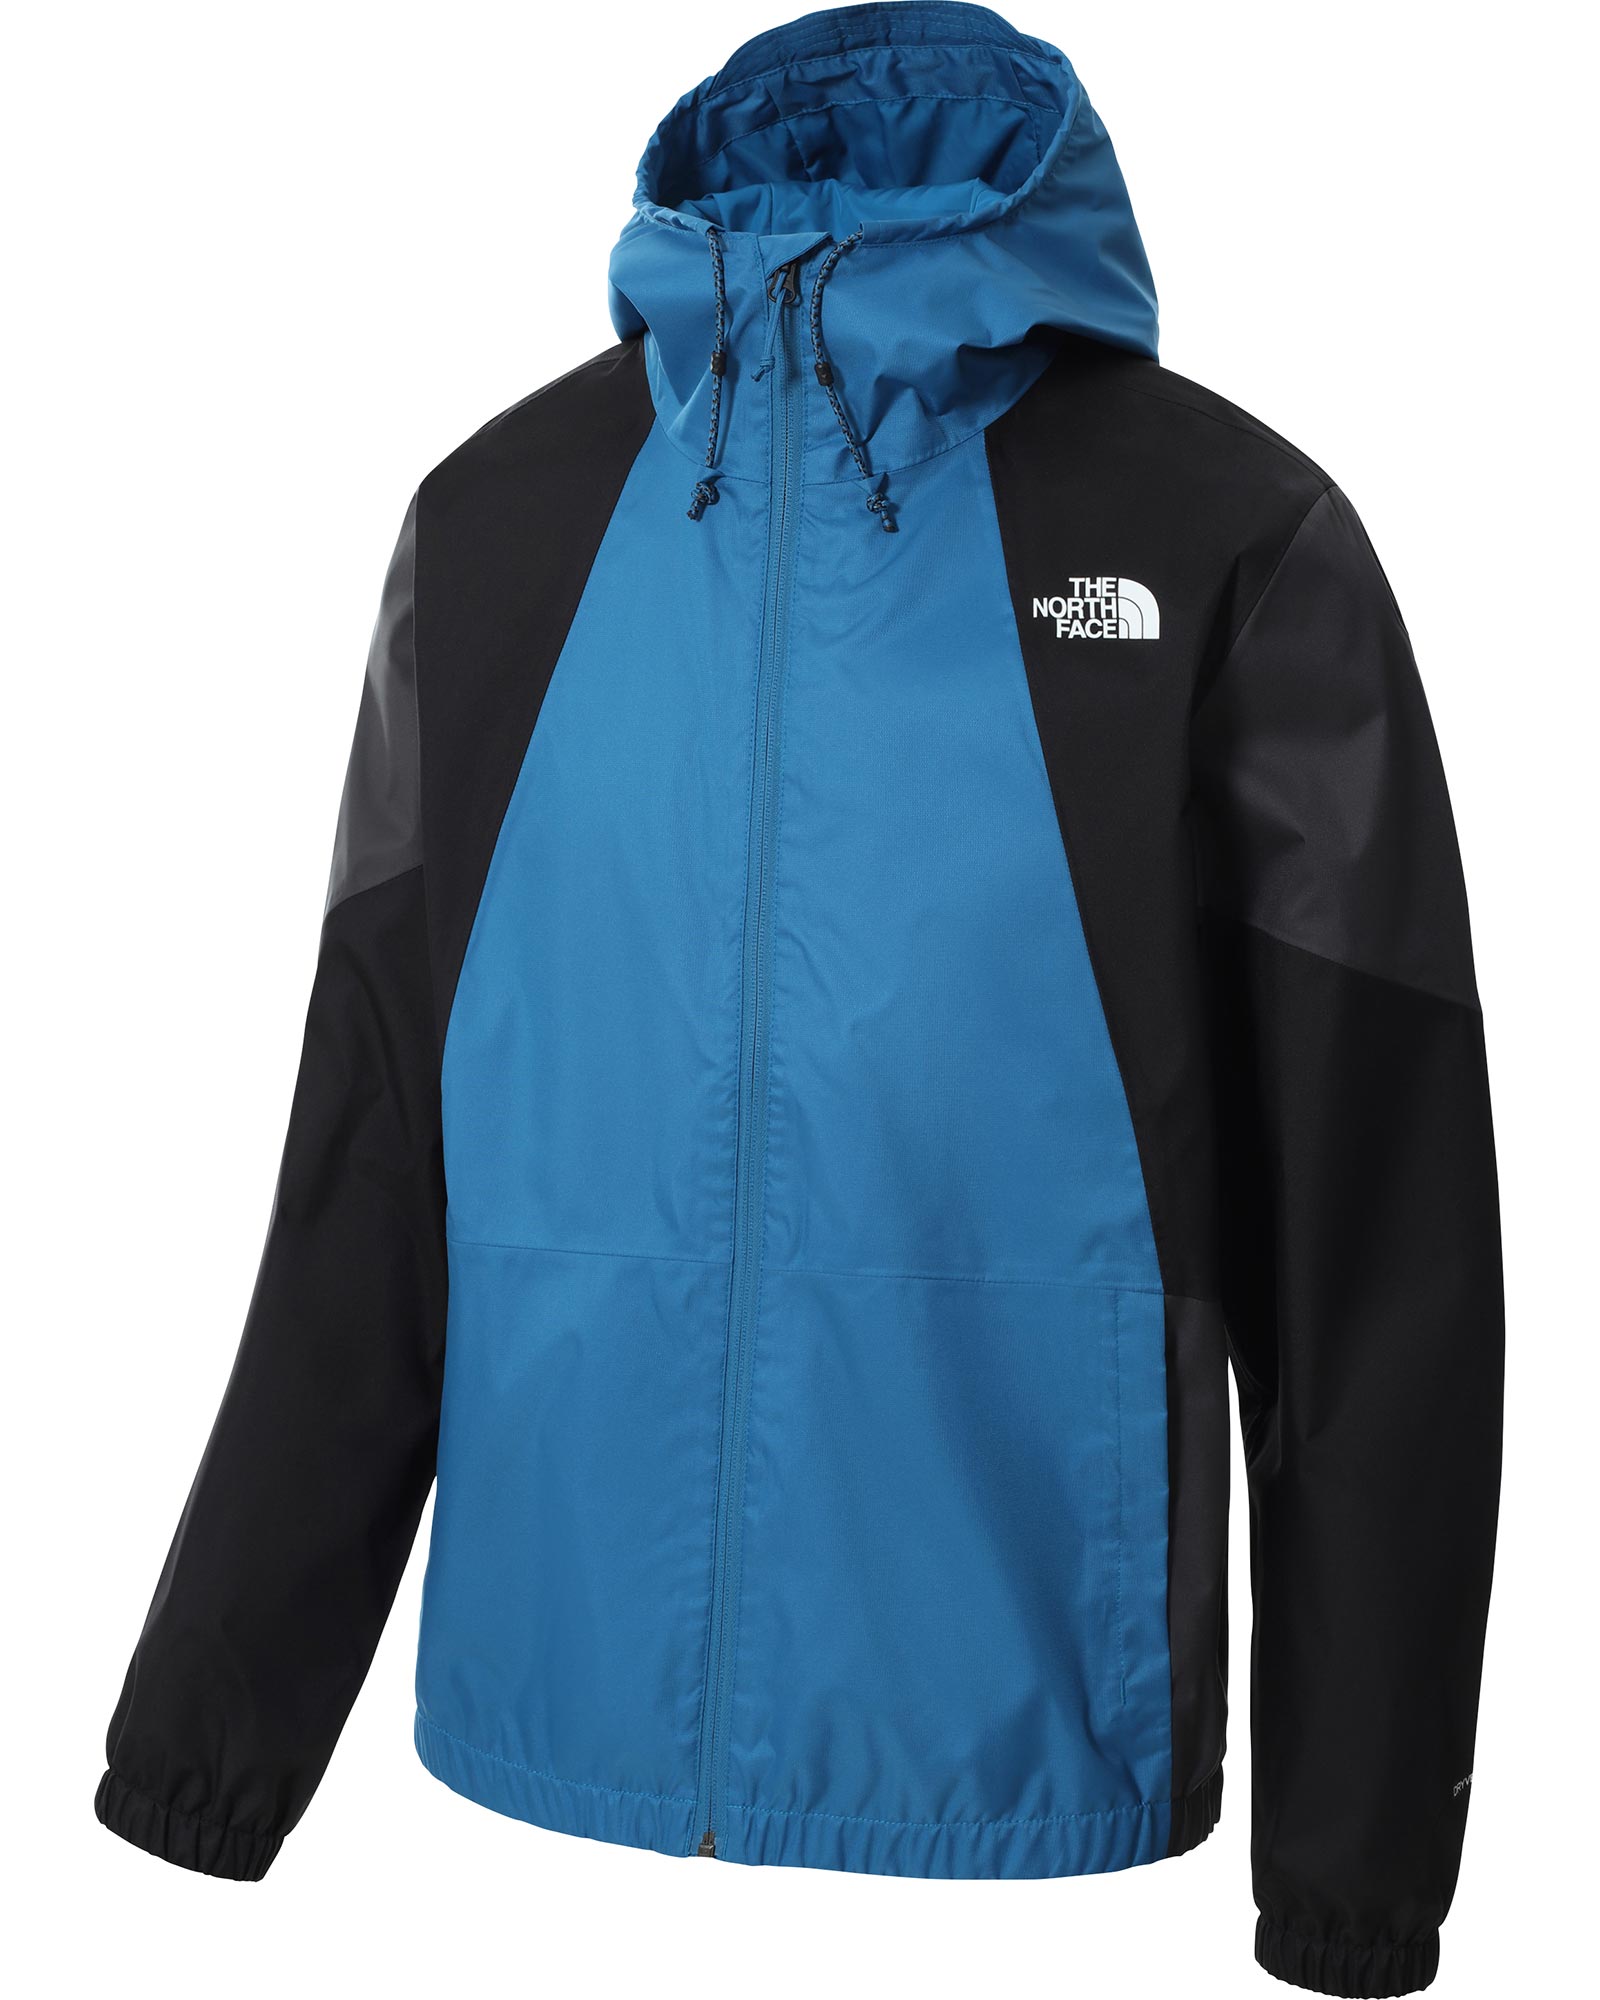 The North Face Farside Men’s Jacket - Banff Blue XL